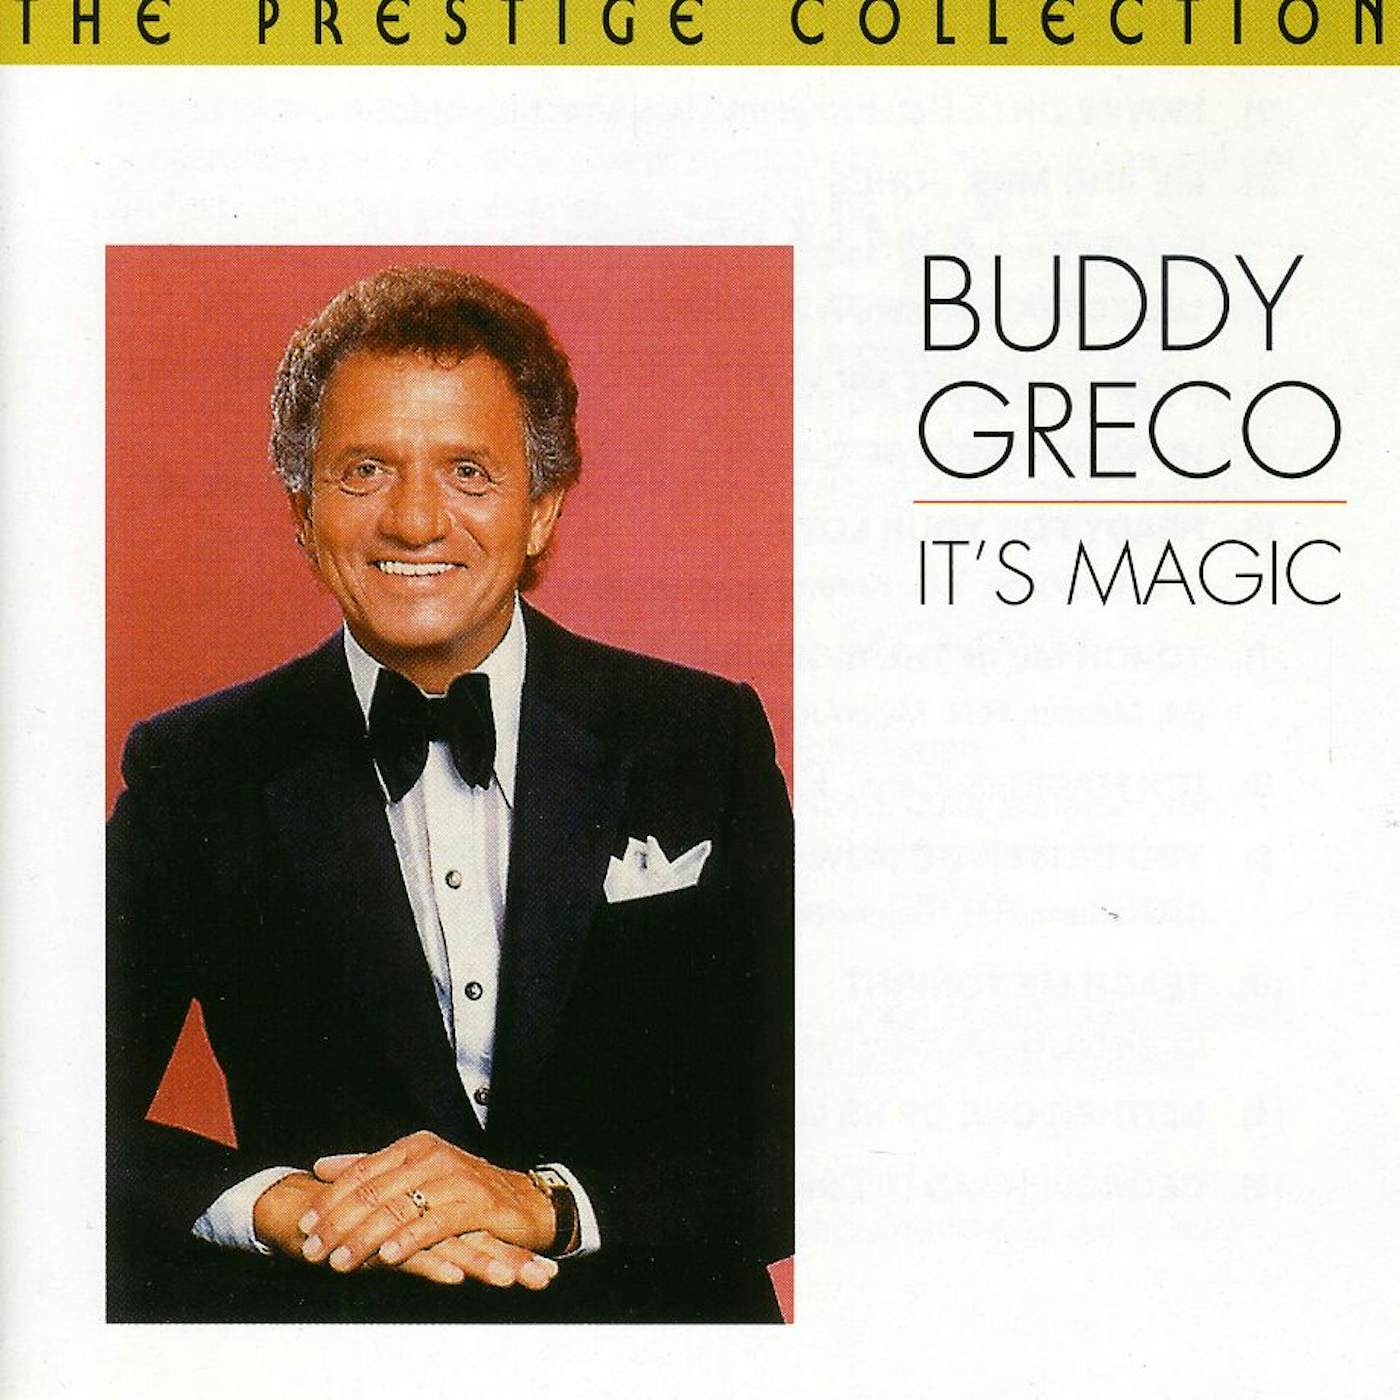 Buddy Greco IT'S MAGIC CD